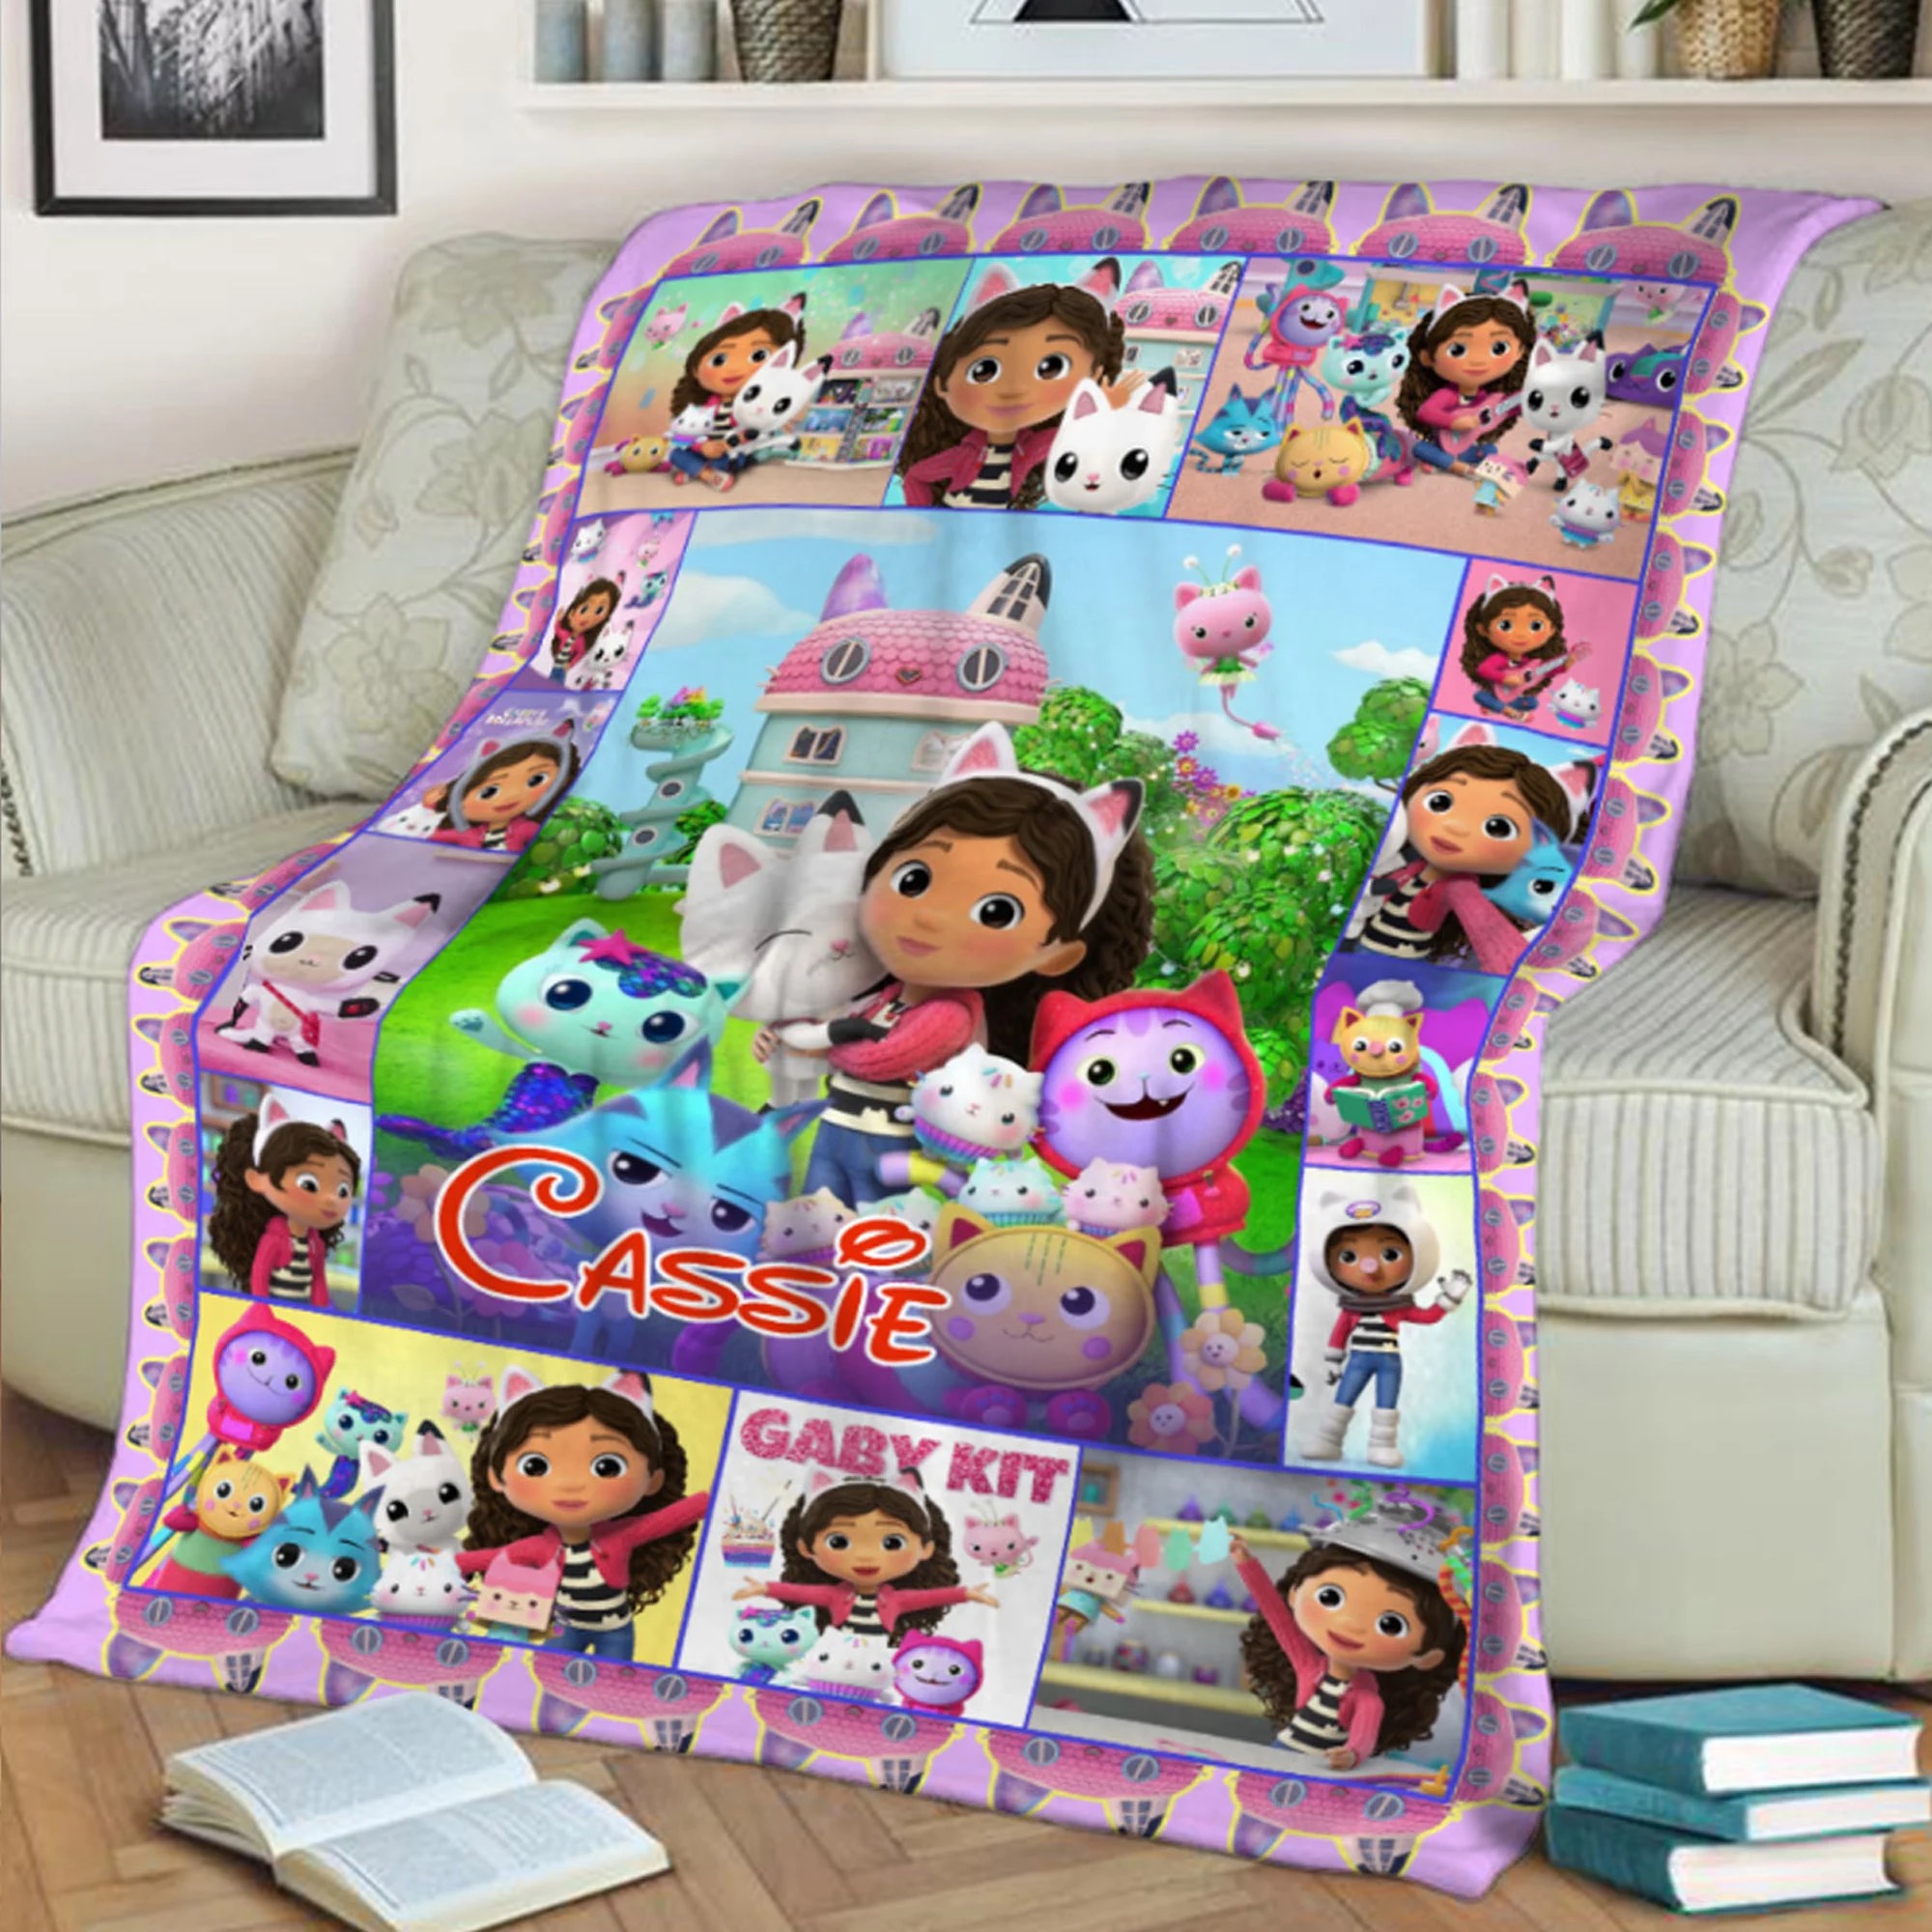 Cassie Gaby Kit Disney Blanket 1